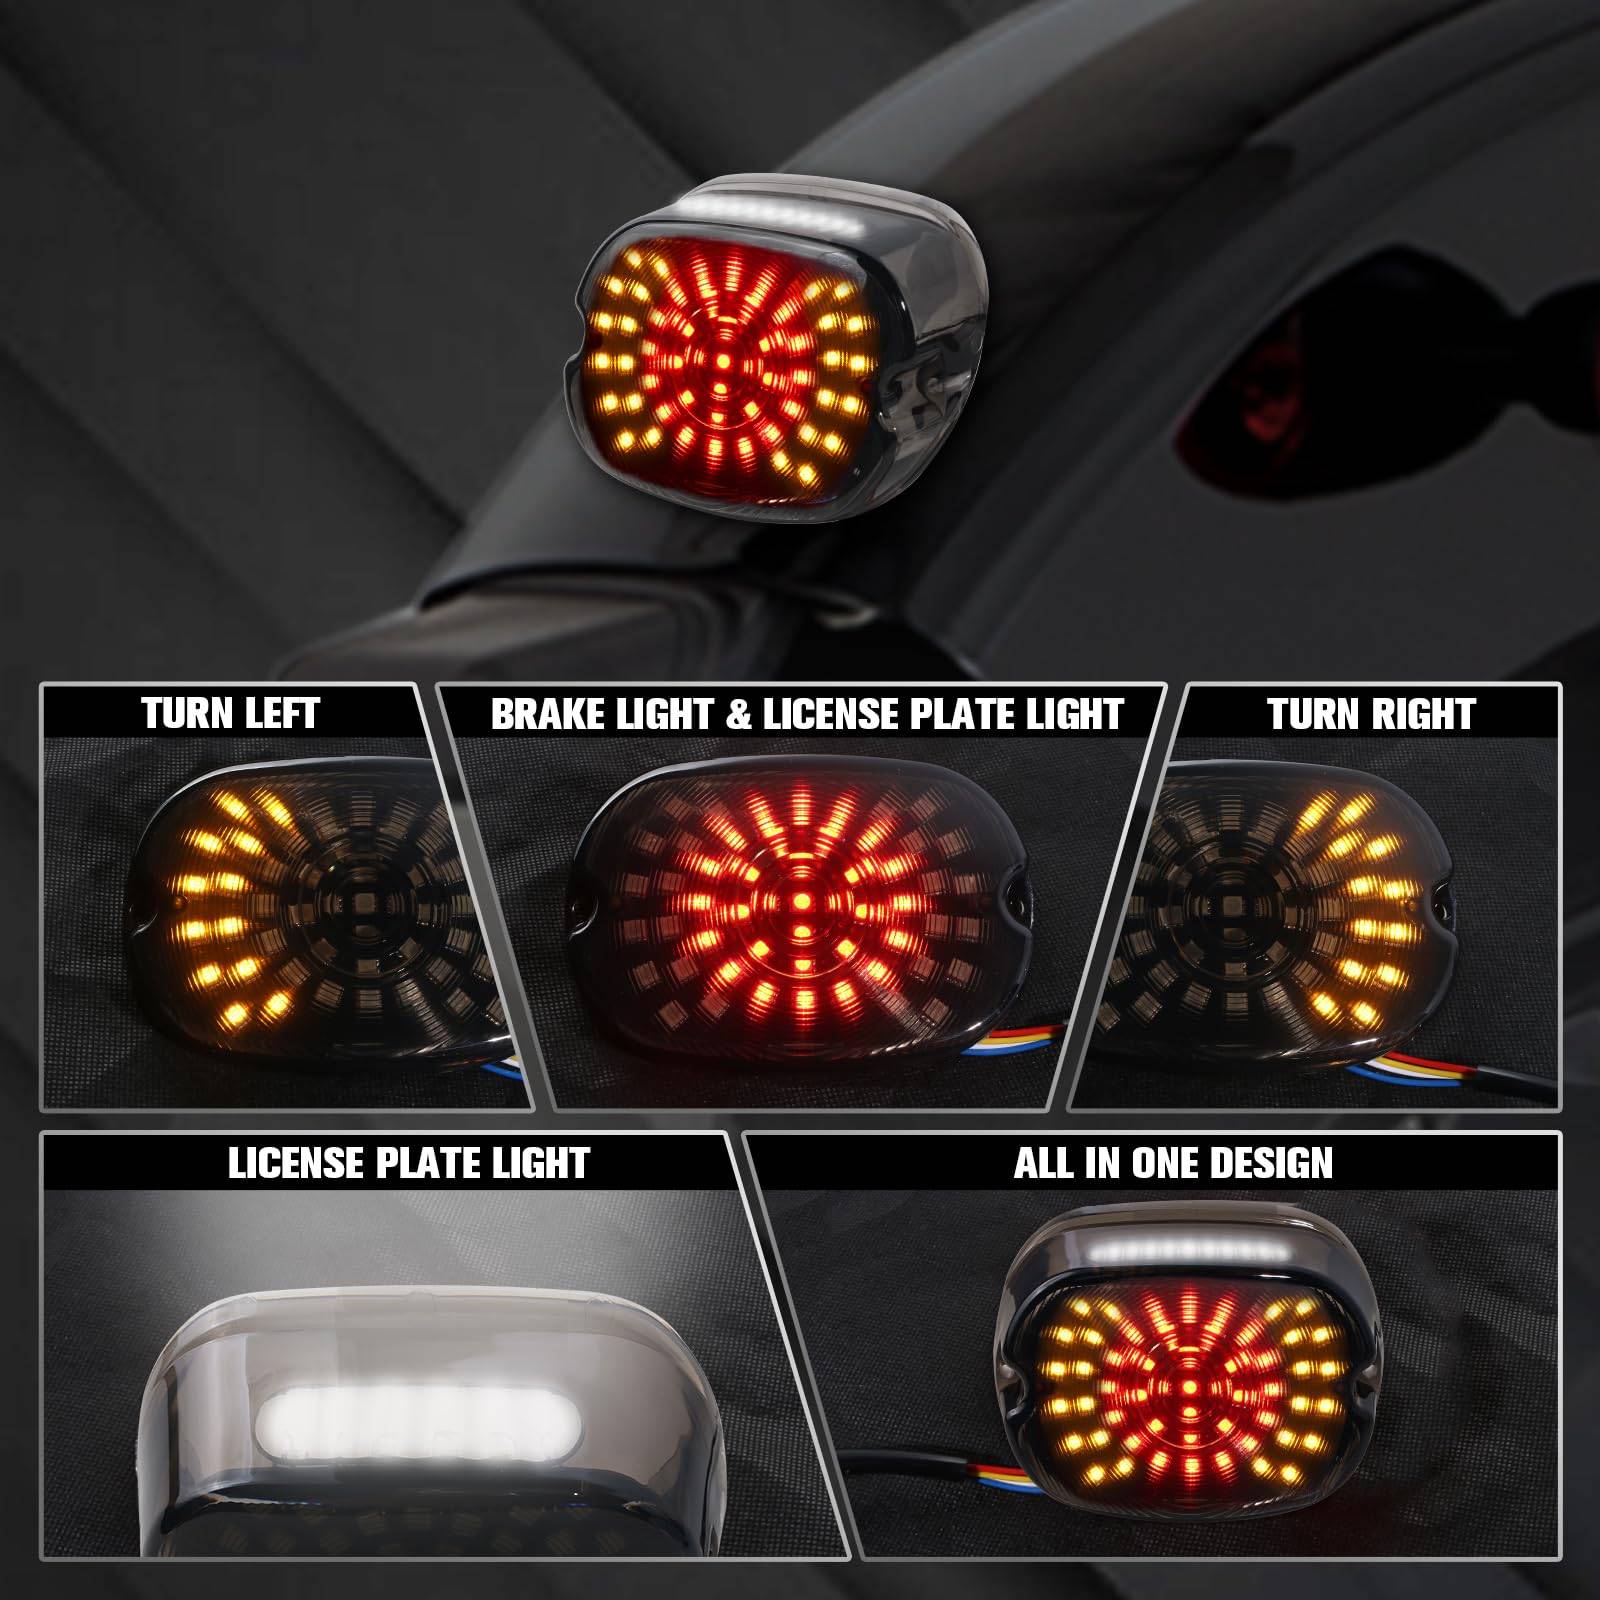 Harley-Davidson LED Tail Light & Turn Signals Combo for 1991-2010 Models